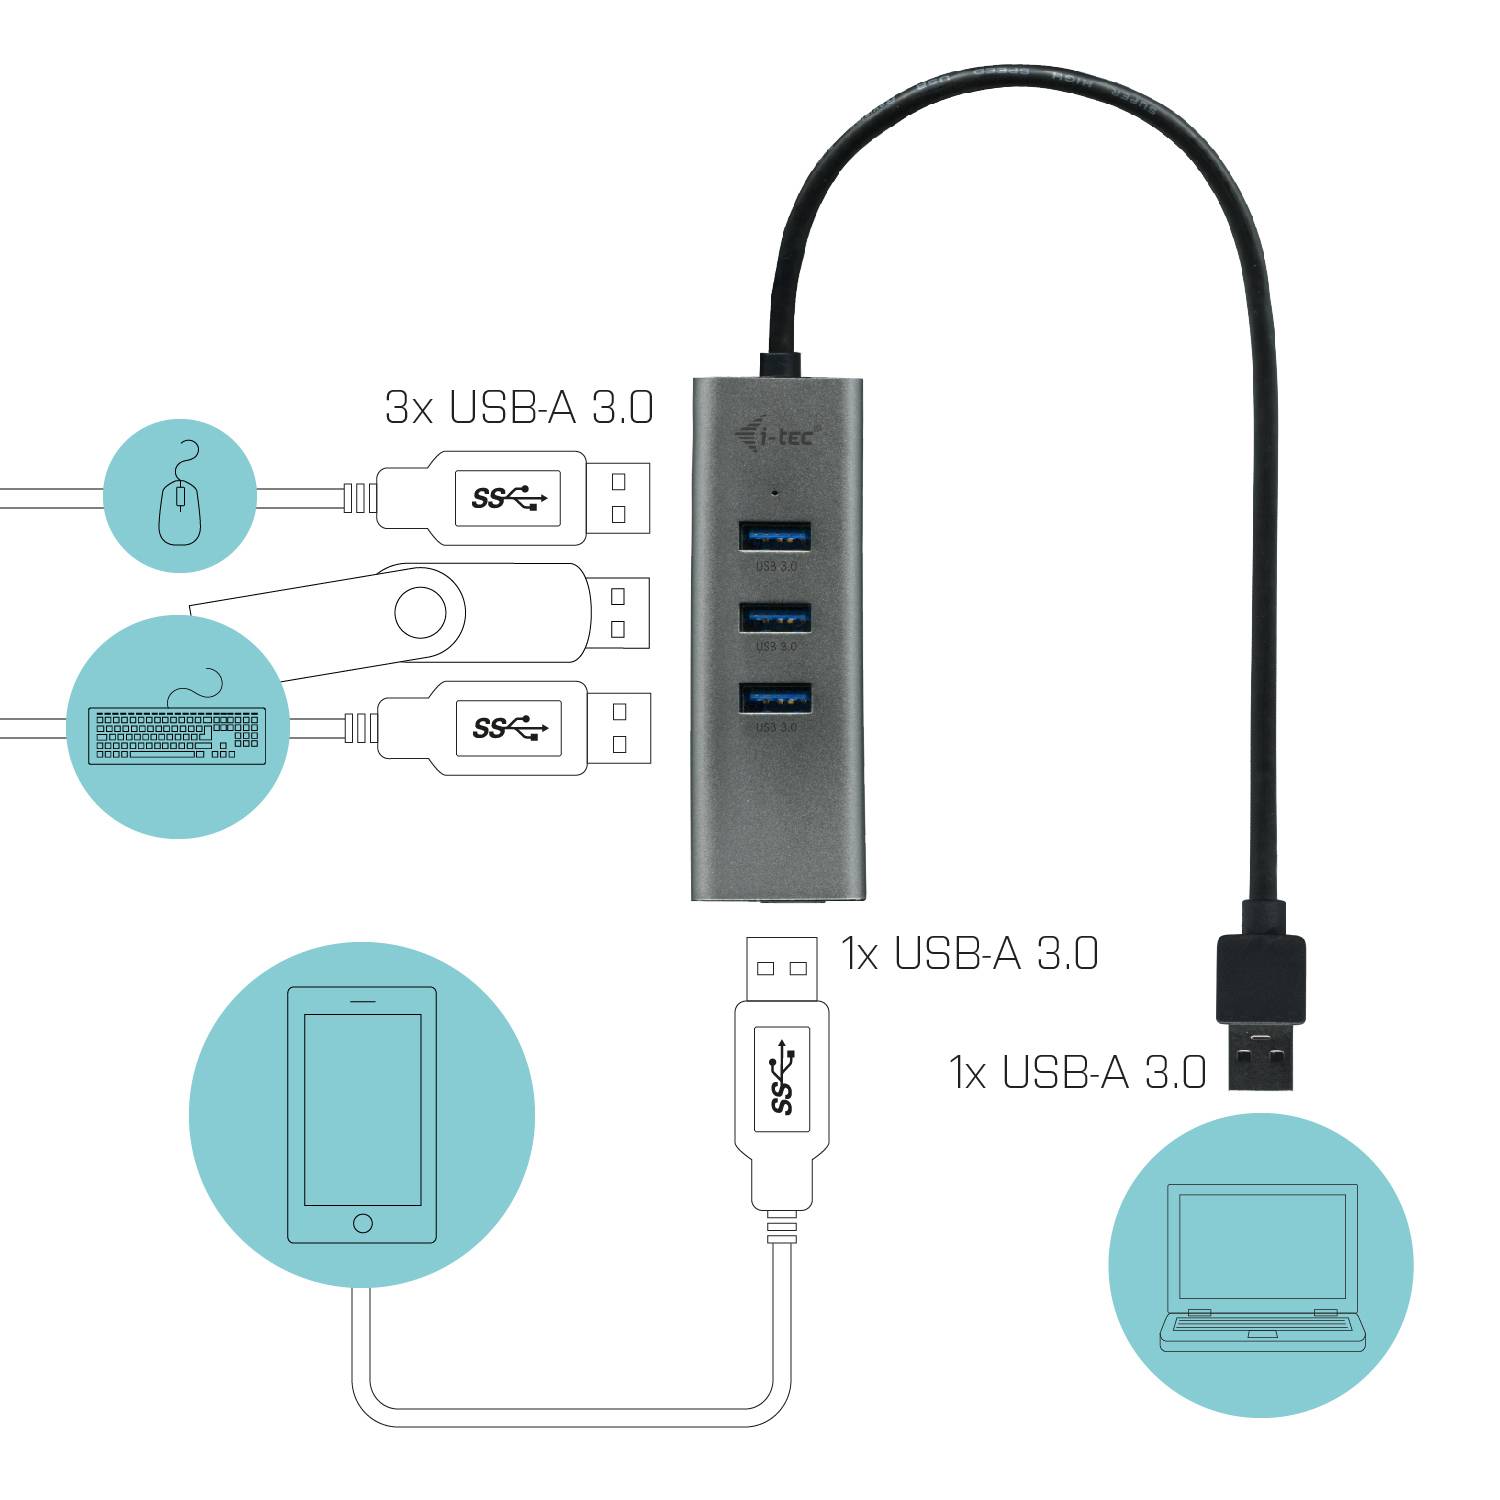 Rca Informatique - image du produit : I-TEC USB 3.0 METAL 4-PORT HUB I-TEC USB 3.0 METAL 4-PORT HUB